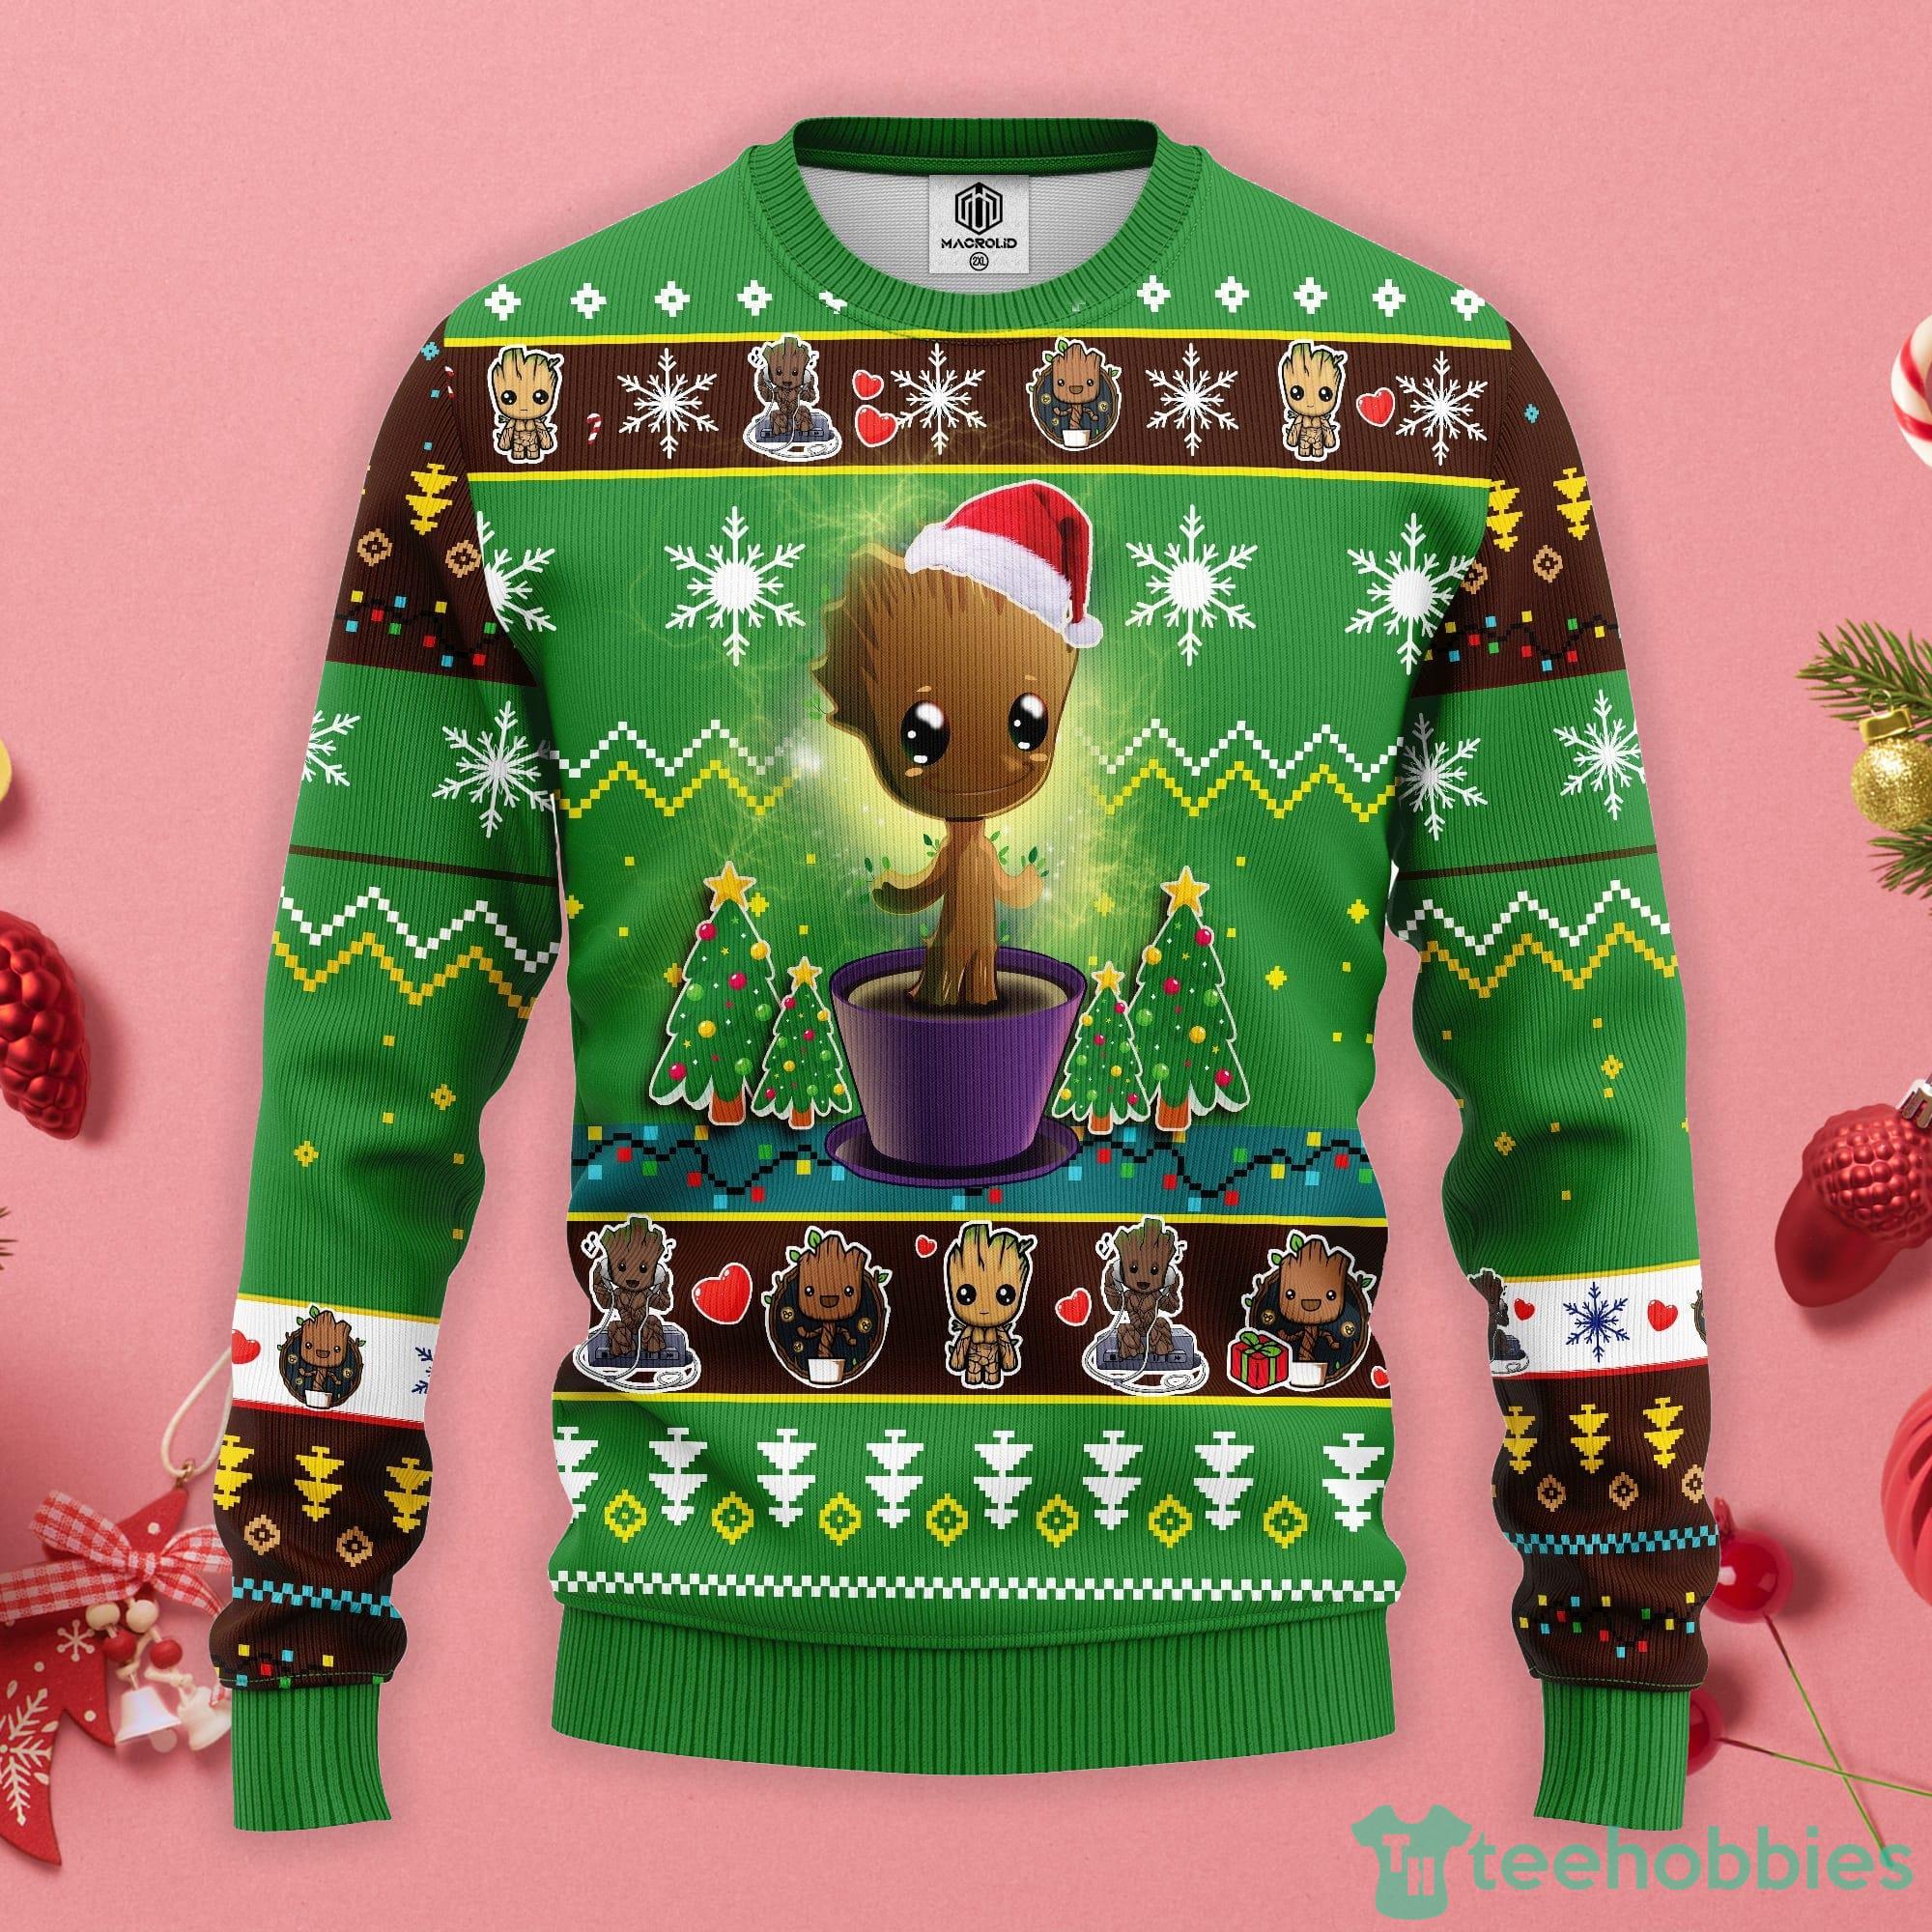 Dallas Mavericks Baby Groot And Grinch NBA Ugly Christmas Sweater - Tagotee